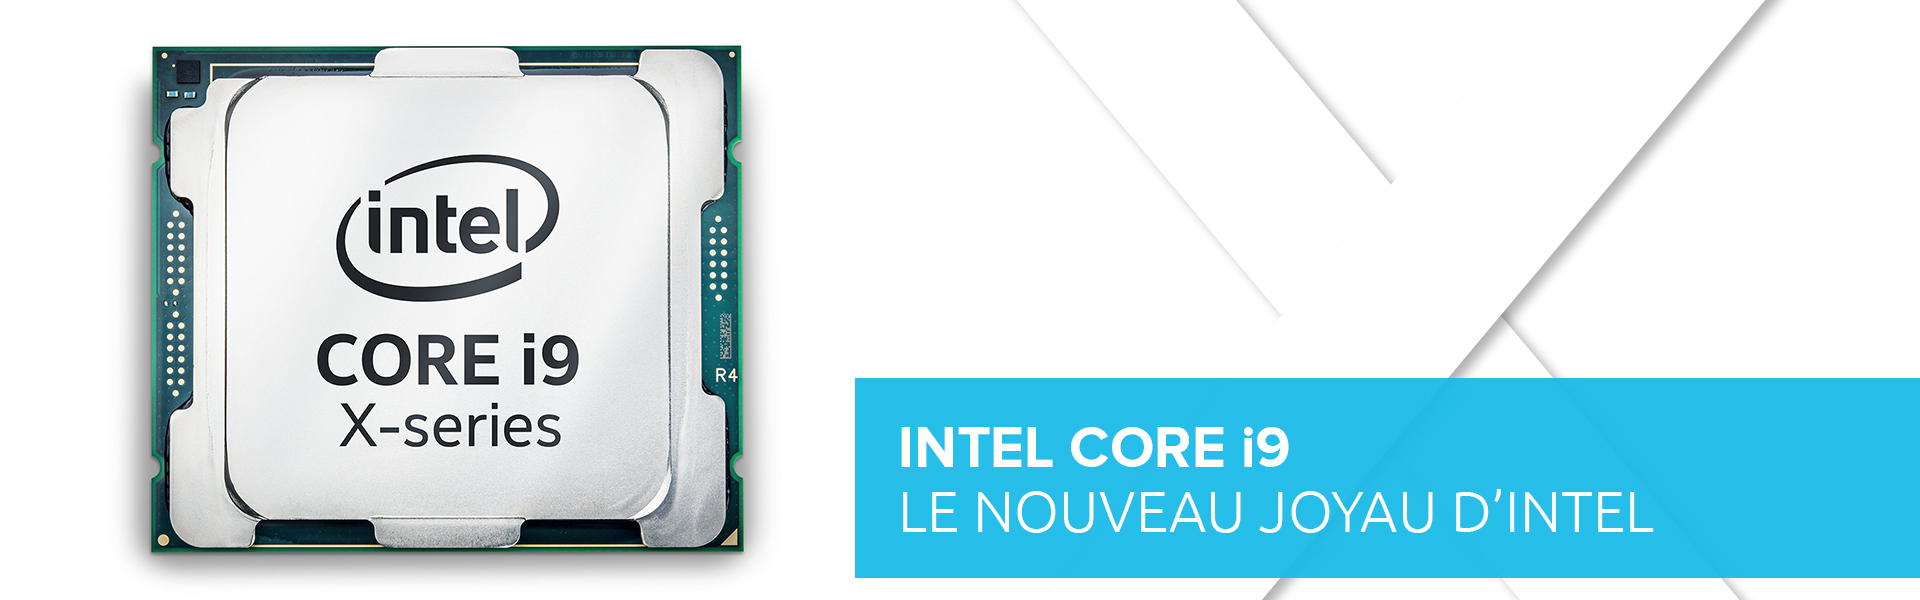 intel-core-i9-actualité-trade-discount-3